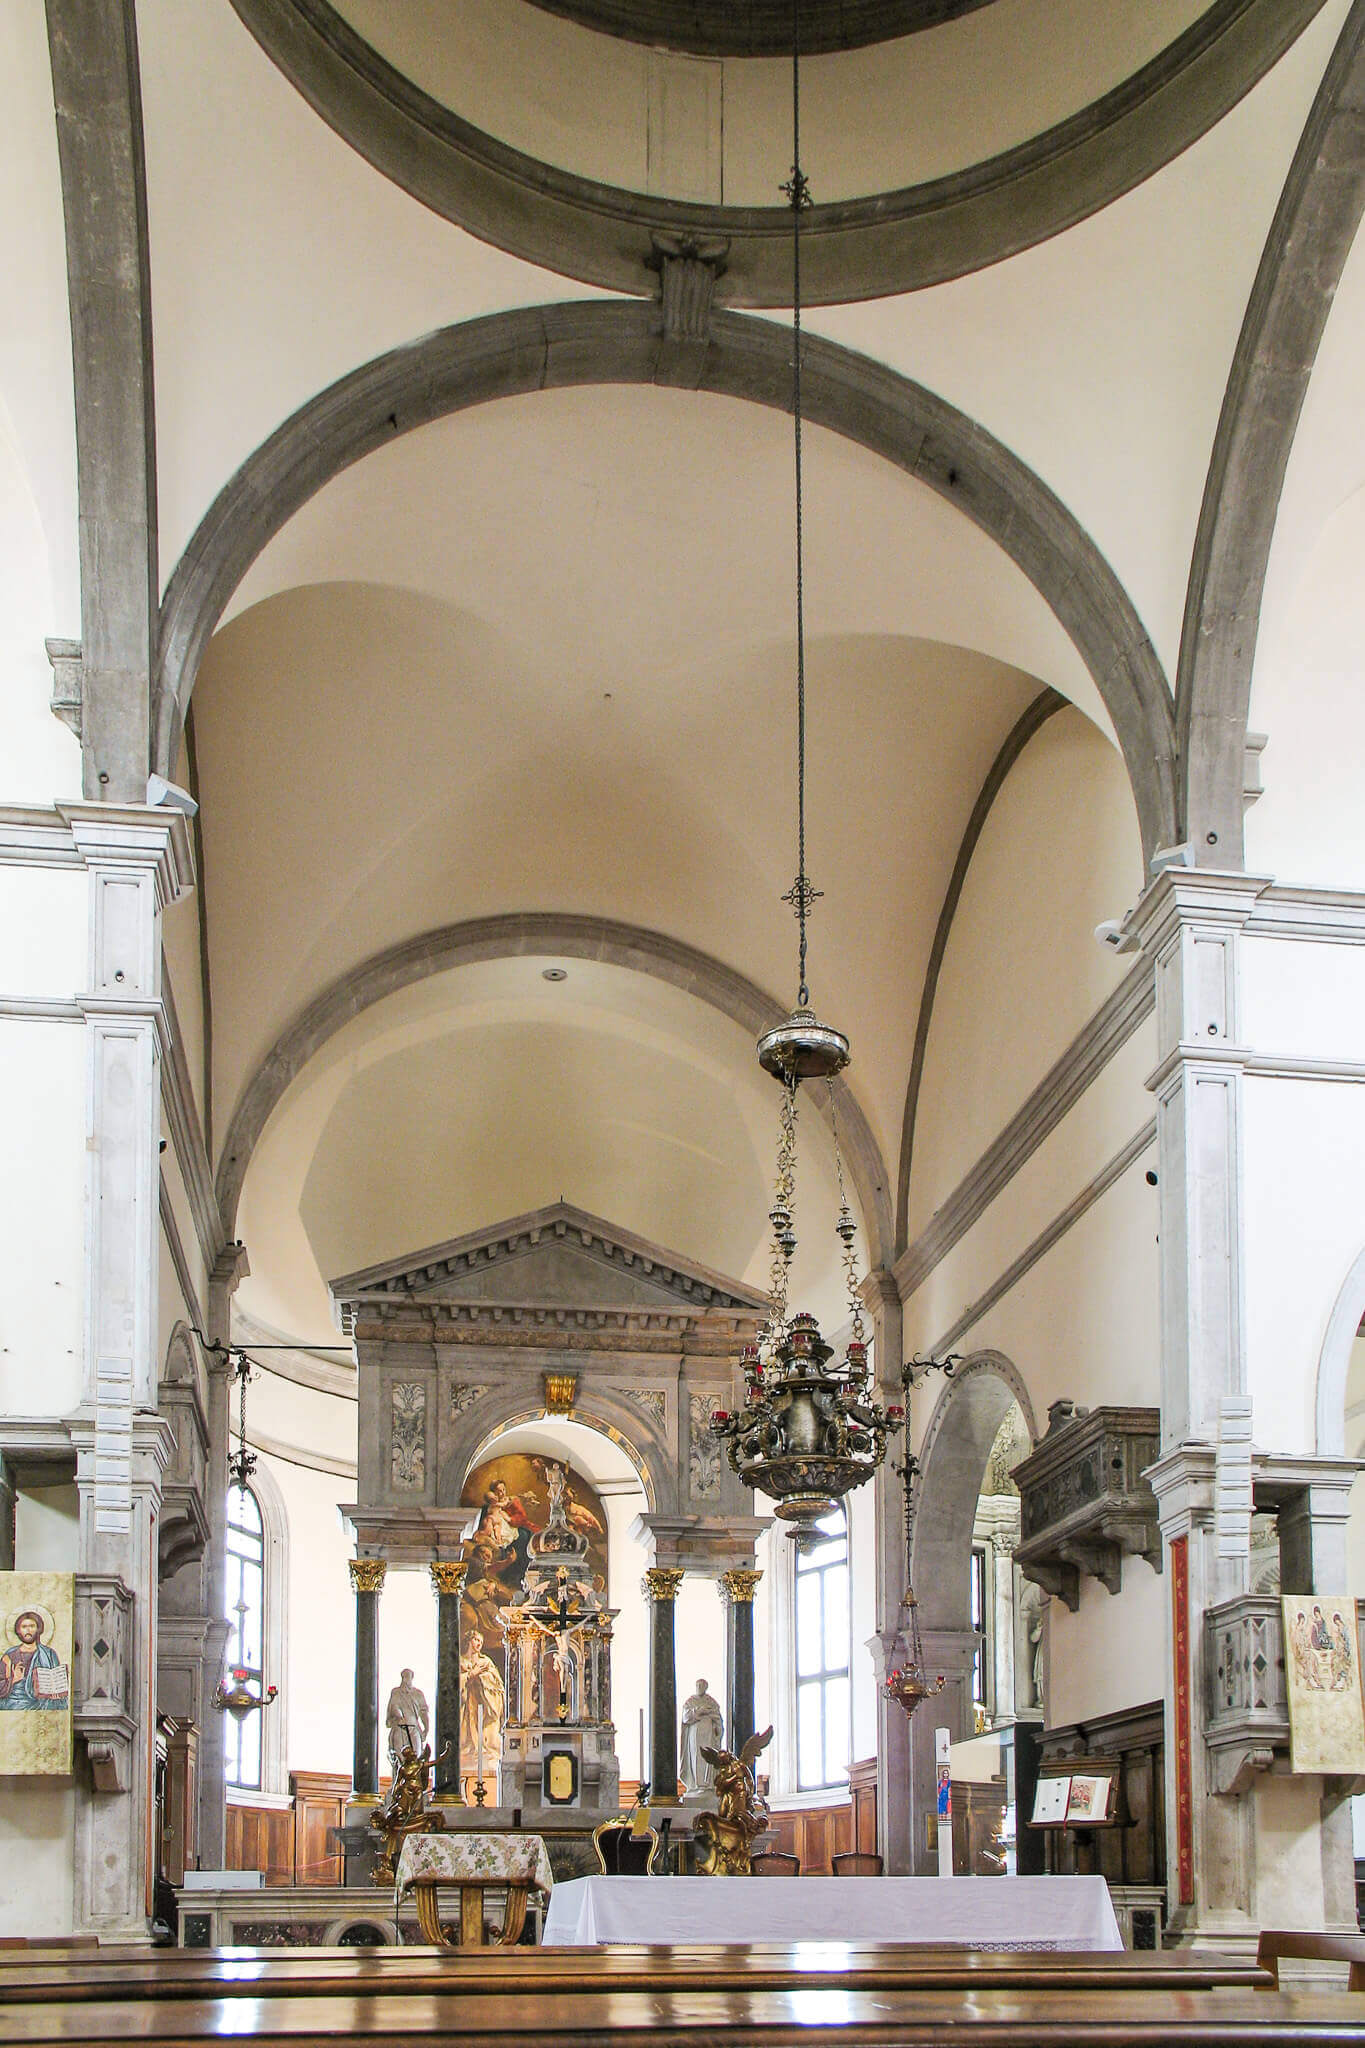 The interior of Santa Maria Formosa in Venice